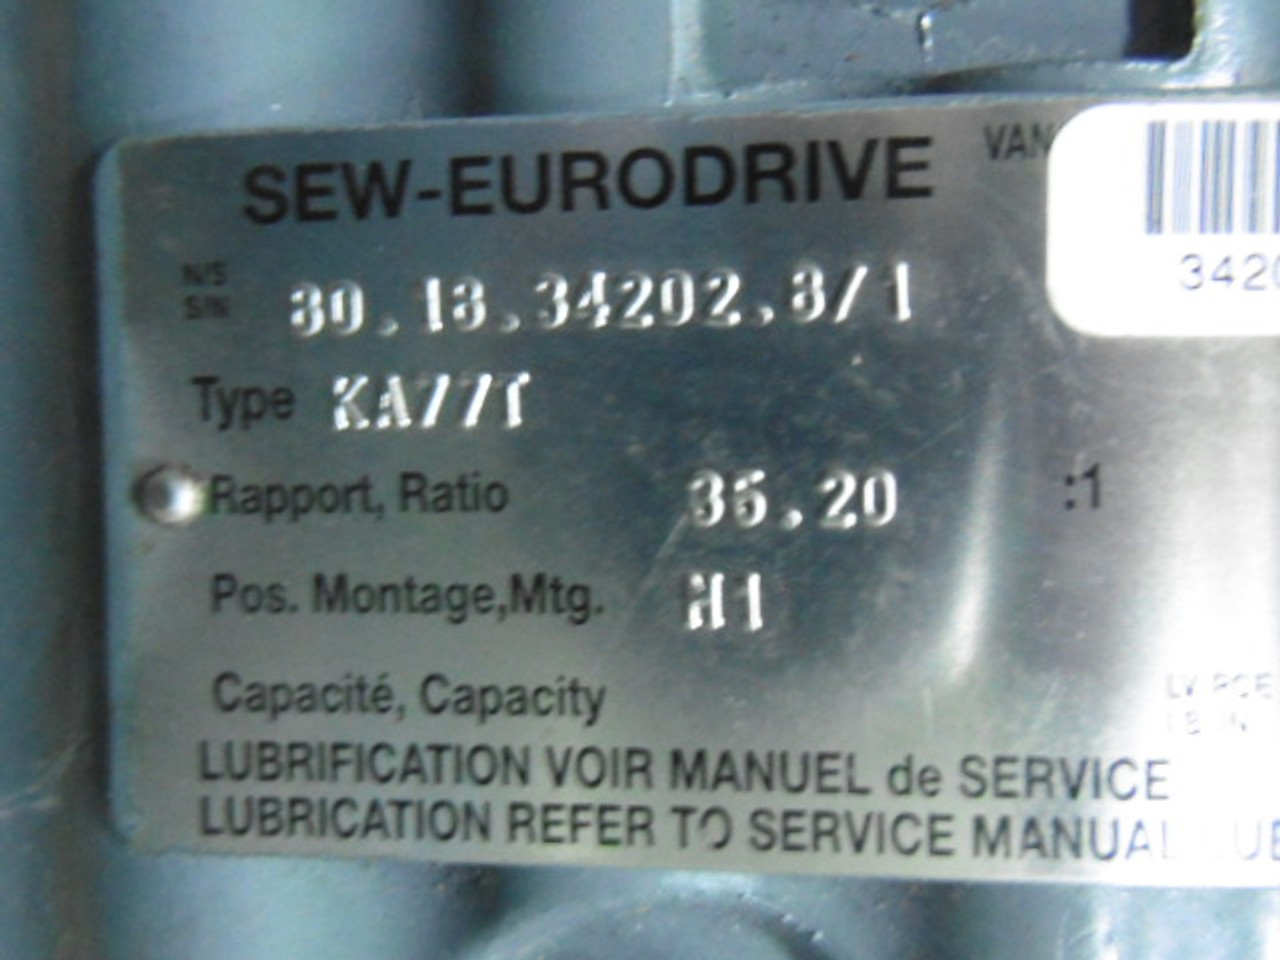 Sew-Eurodrive KA77T Gear Motor 85.20:1 Ratio USED